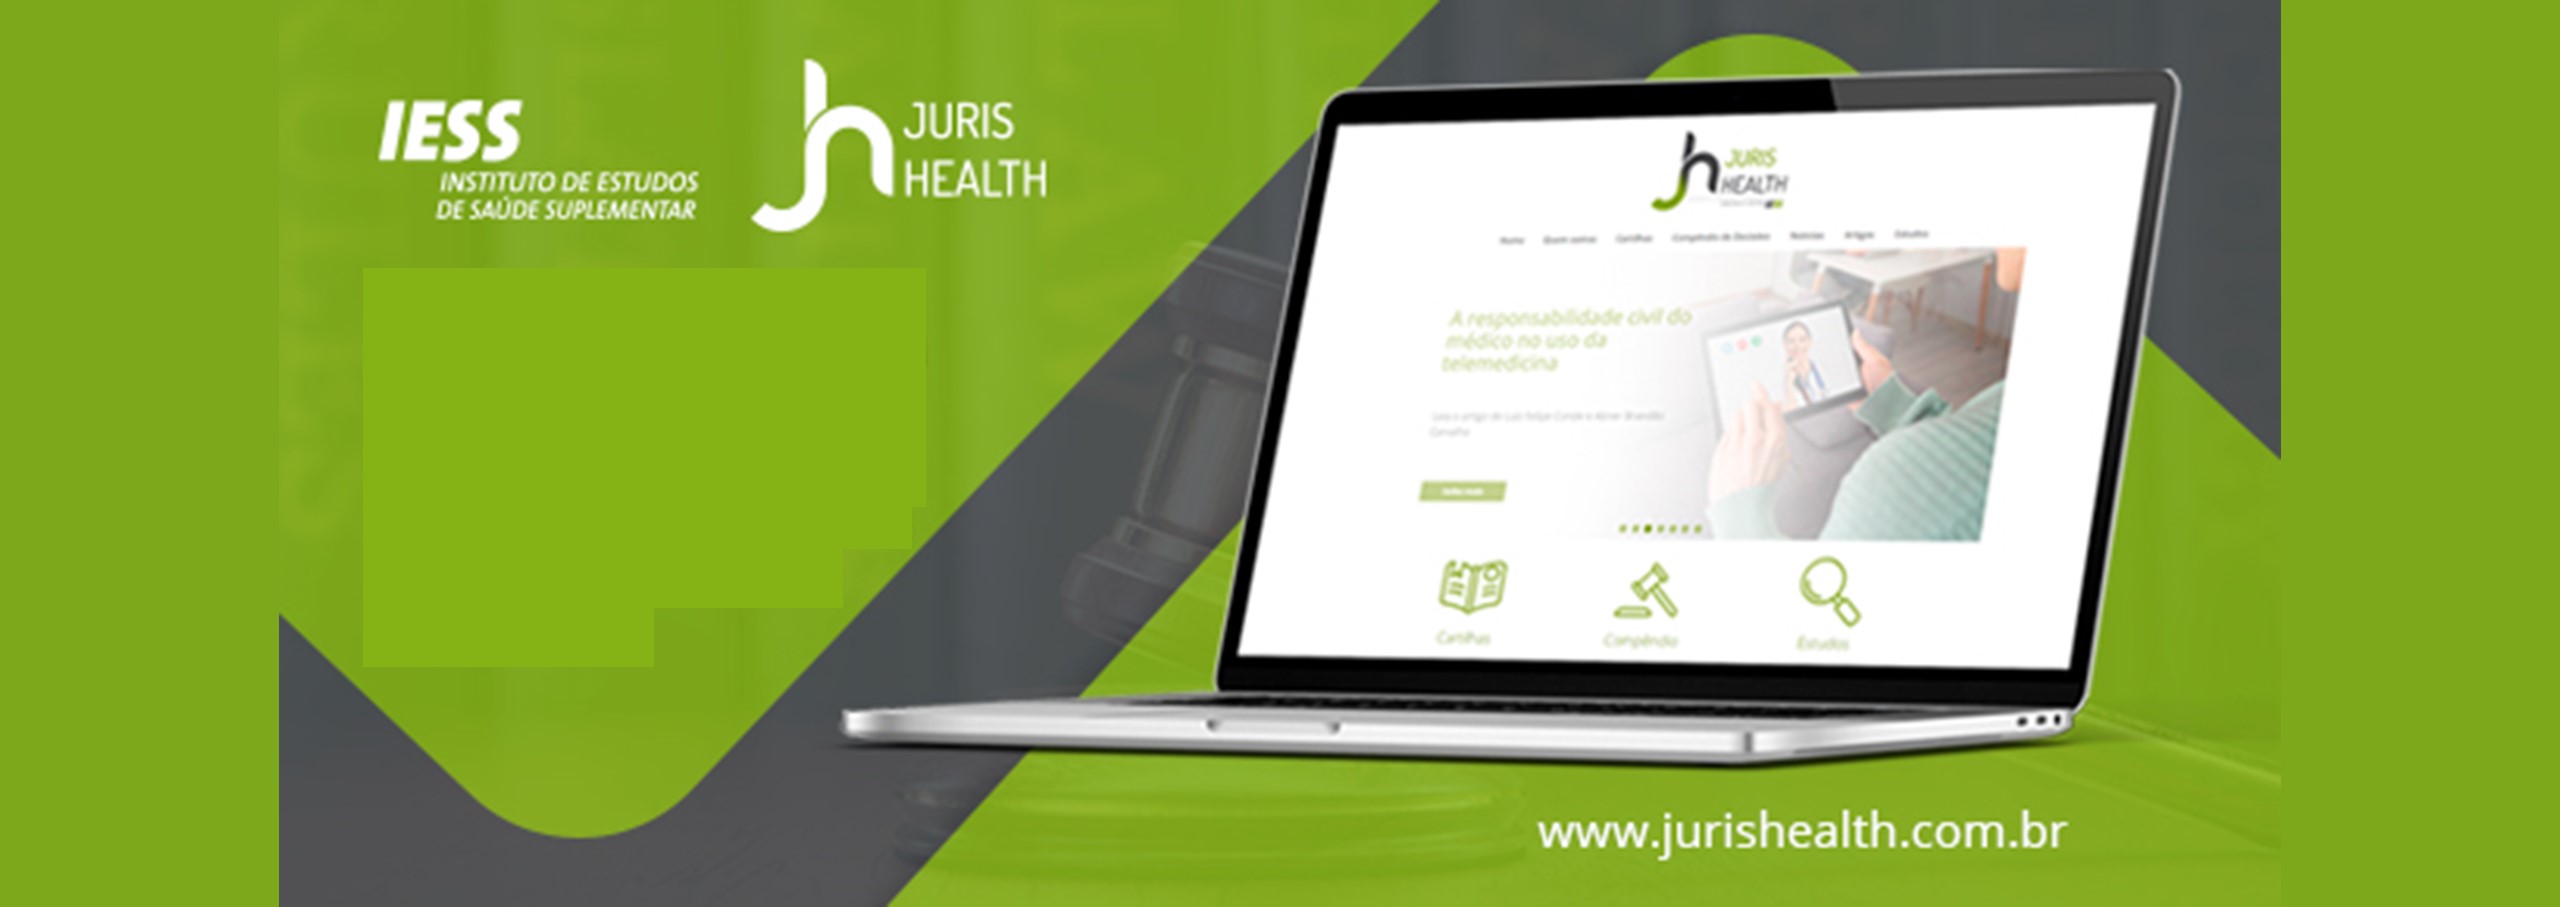 Juris Health: Plataforma de conteúdos jurídicos